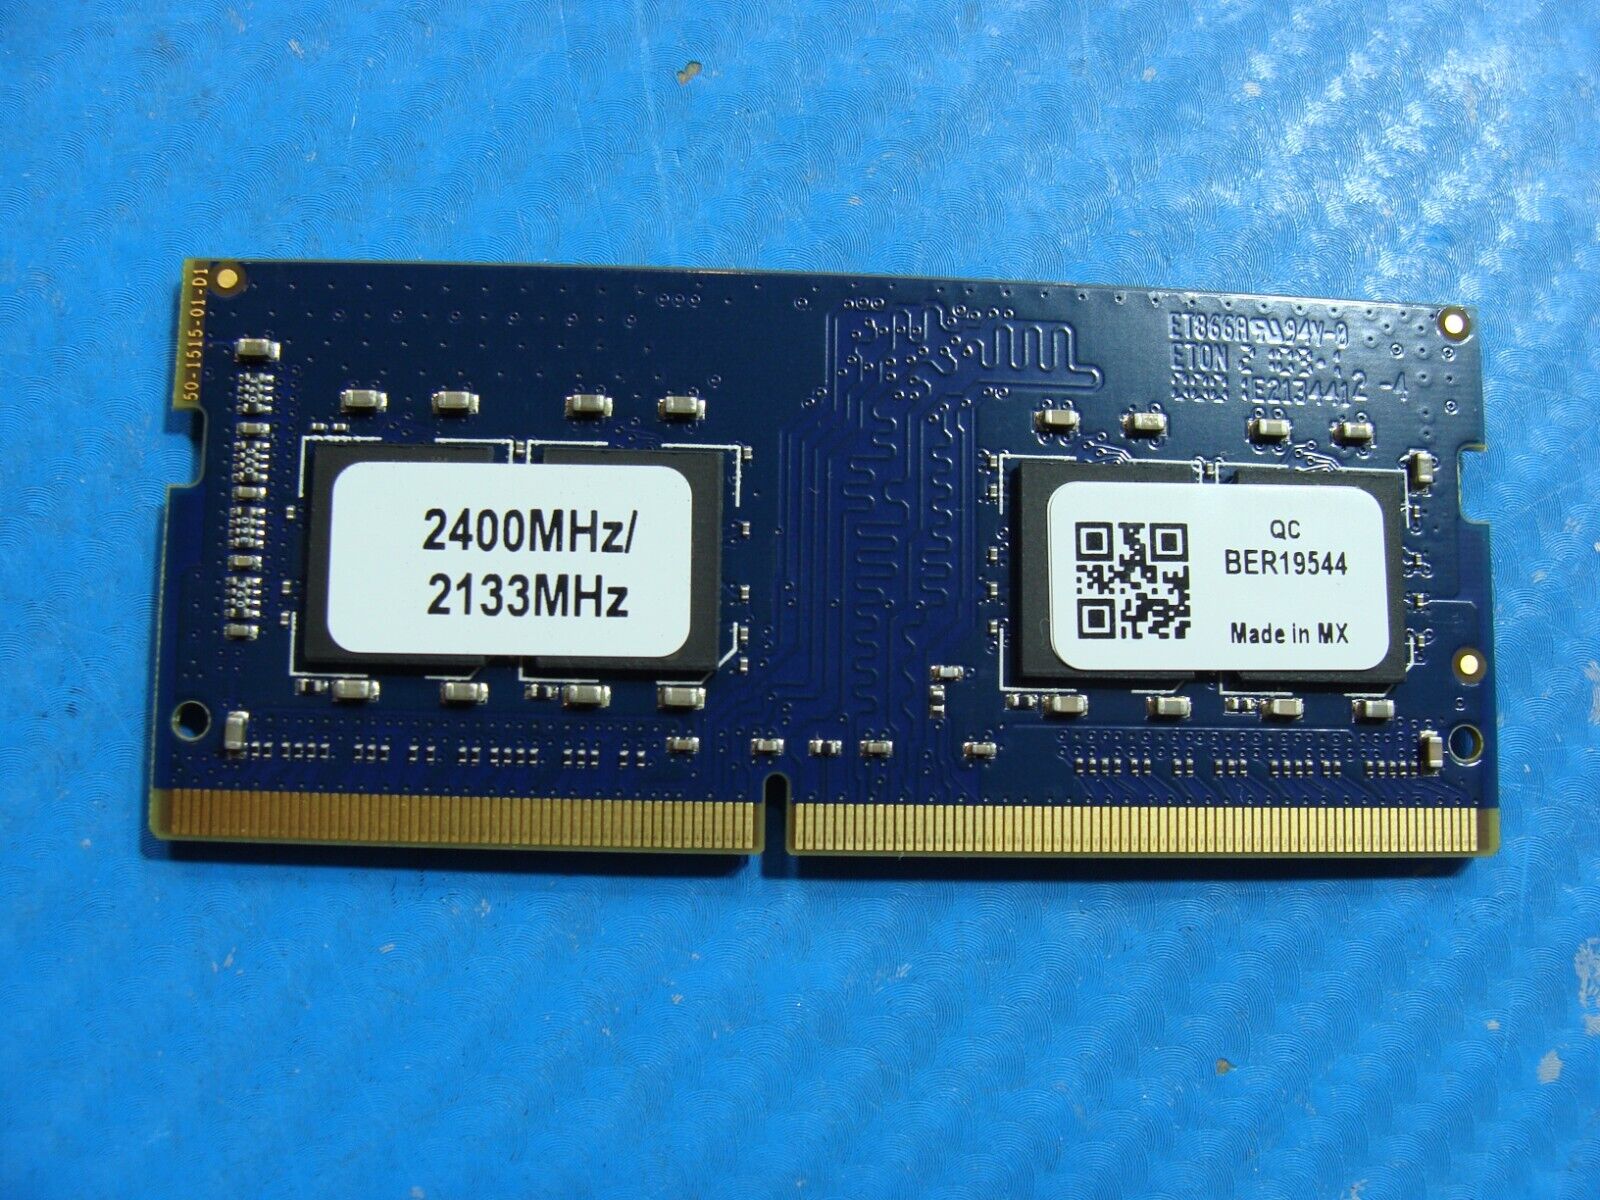 Dell 3310 Visiontek 16GB DDR4 2400MHz SODIMM Memory Ram